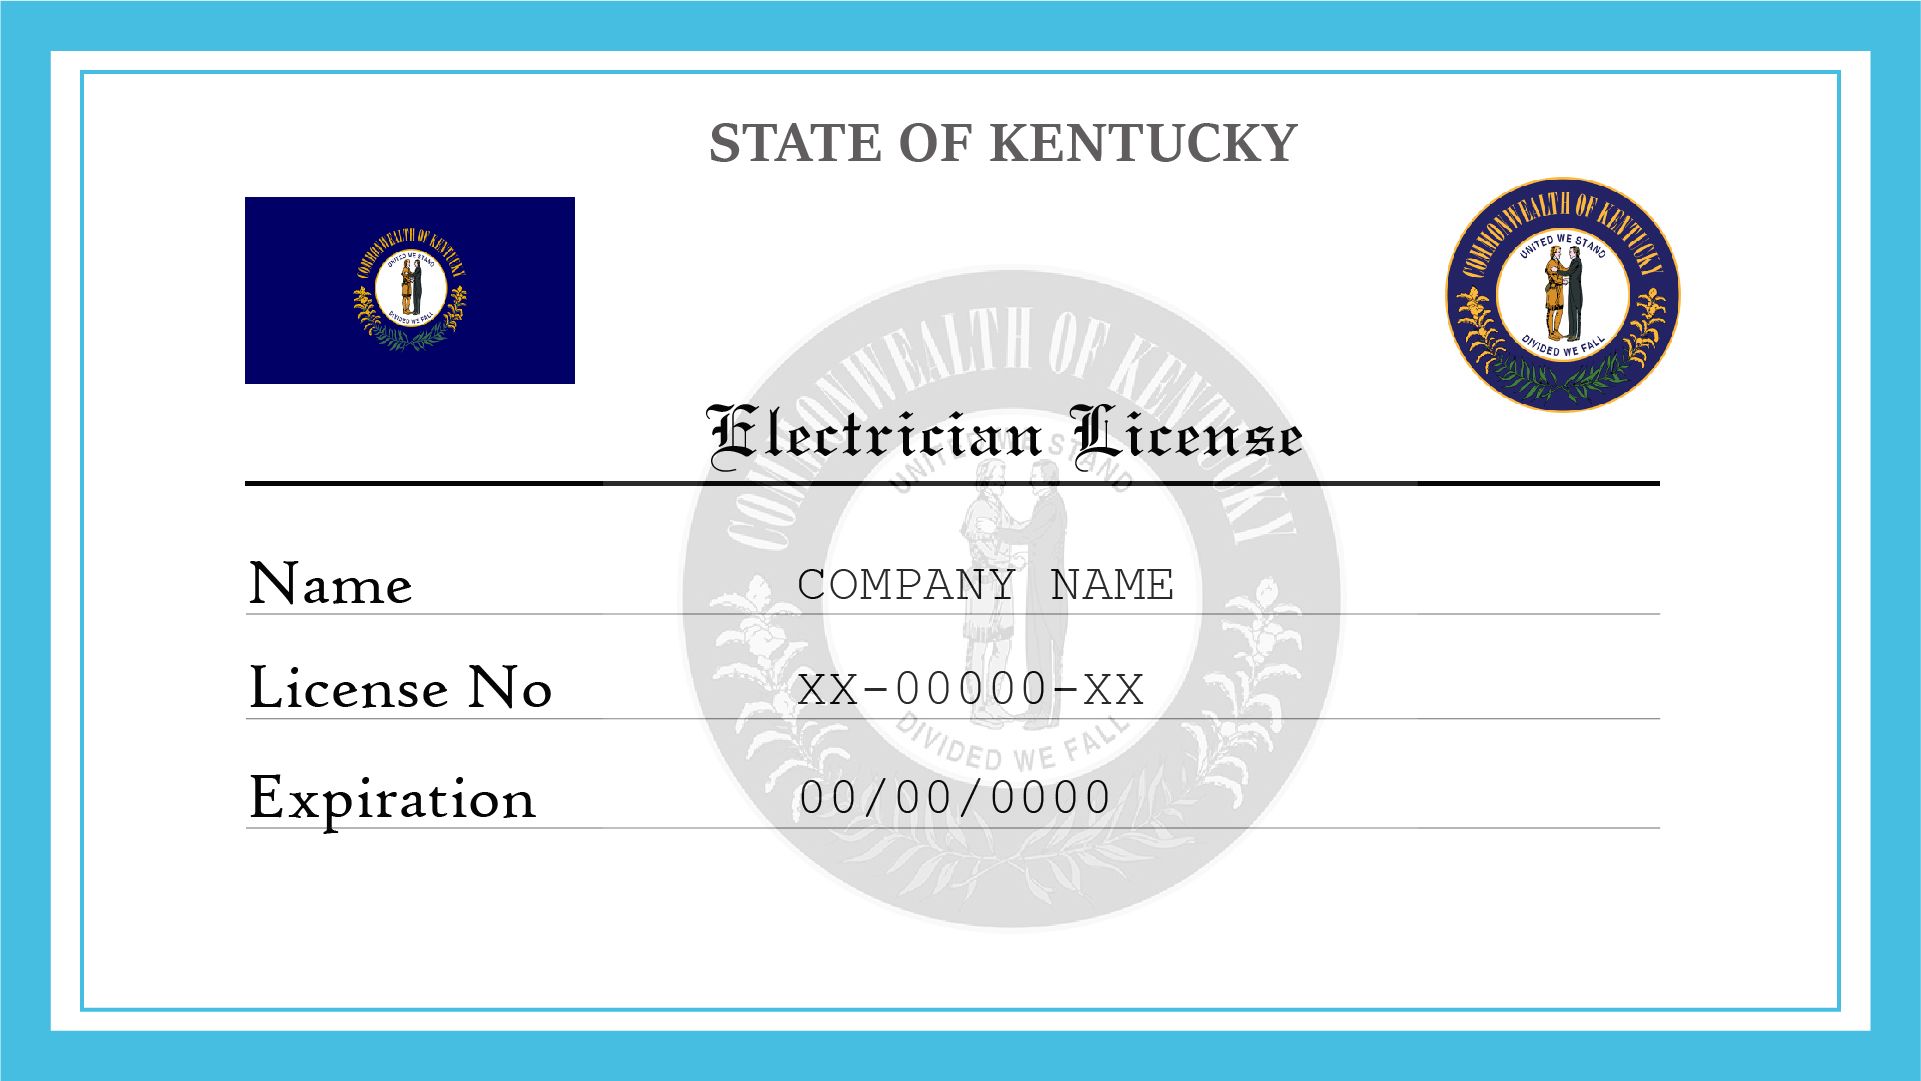 Kentucky residential appliance installer license prep class for ios download